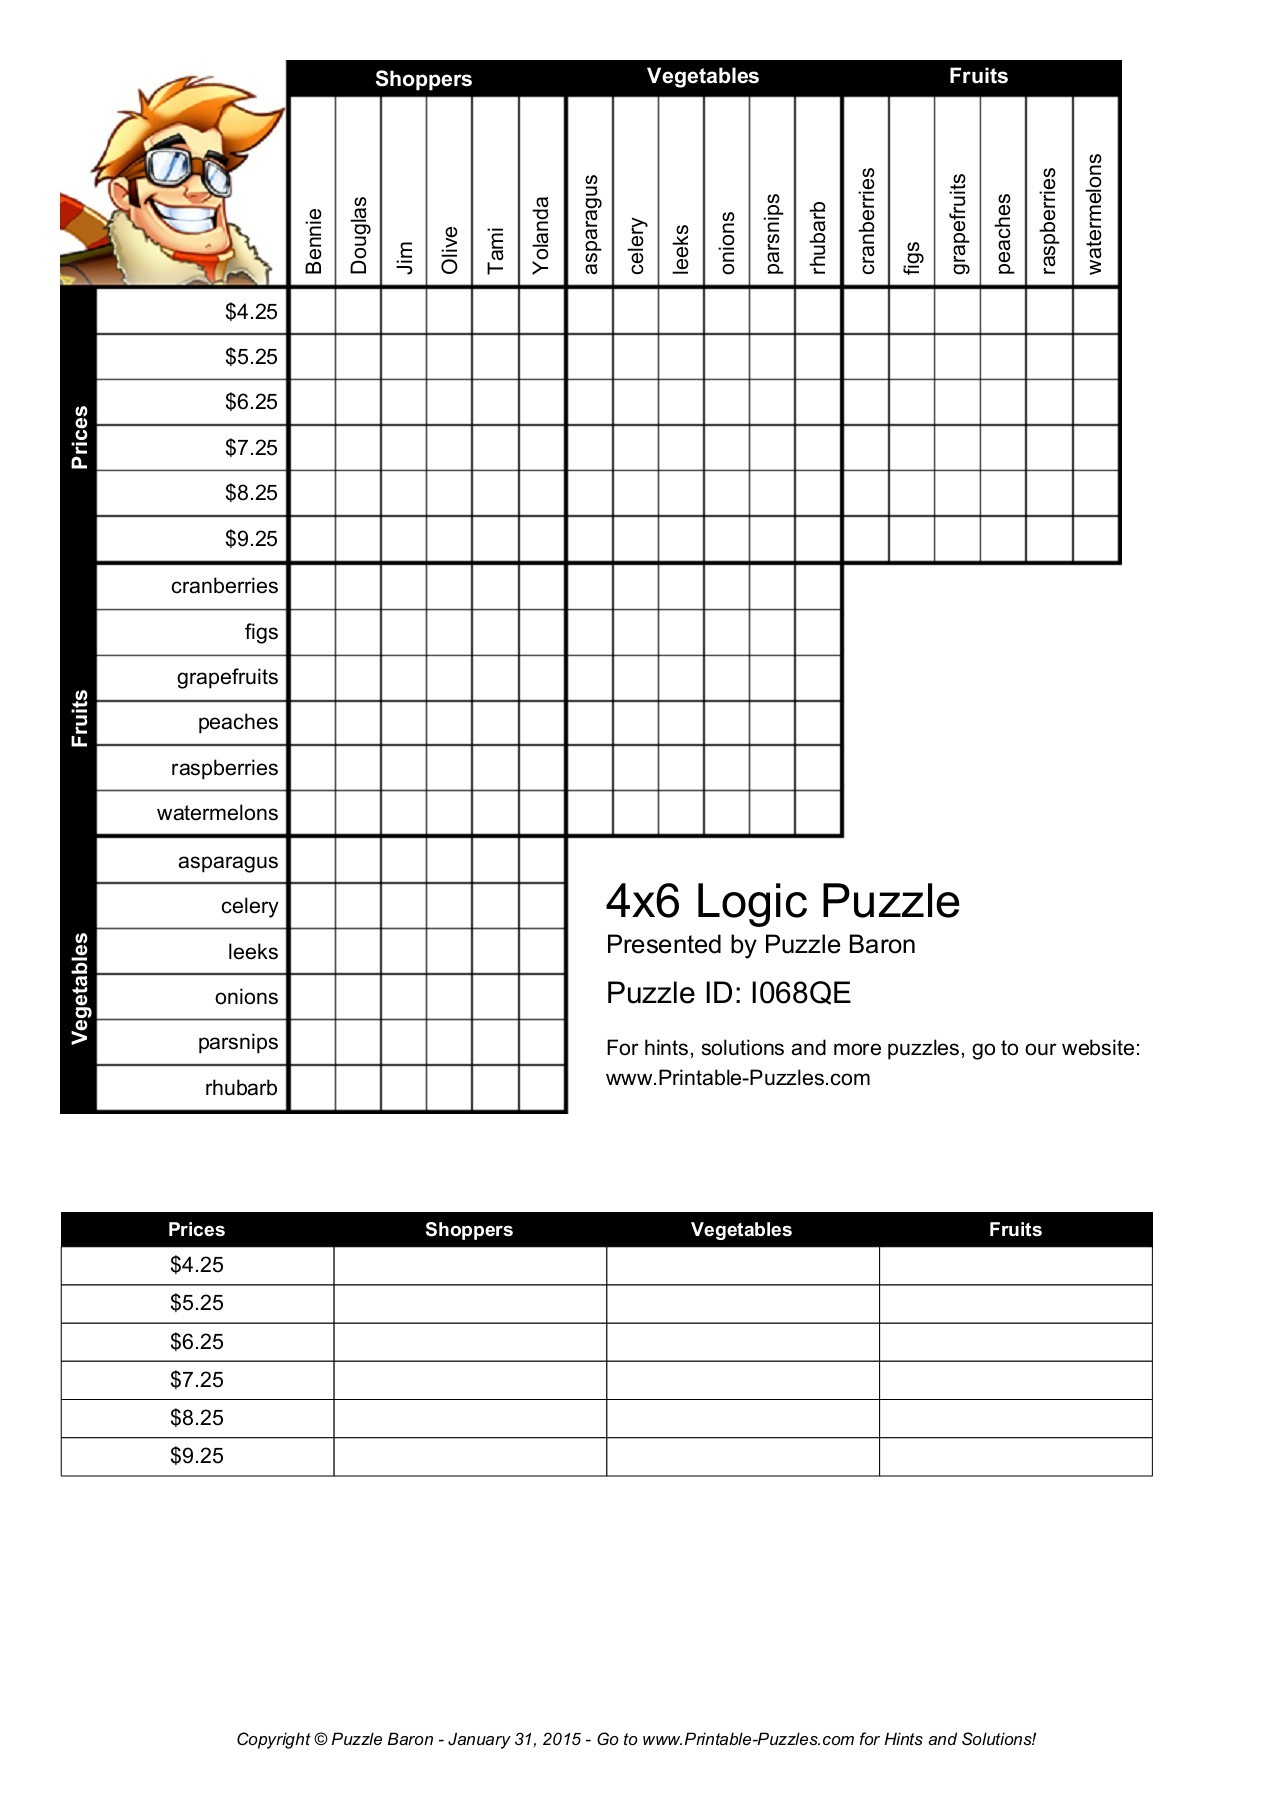 logic puzzles portfolio categories puzzle baron printable puzzles